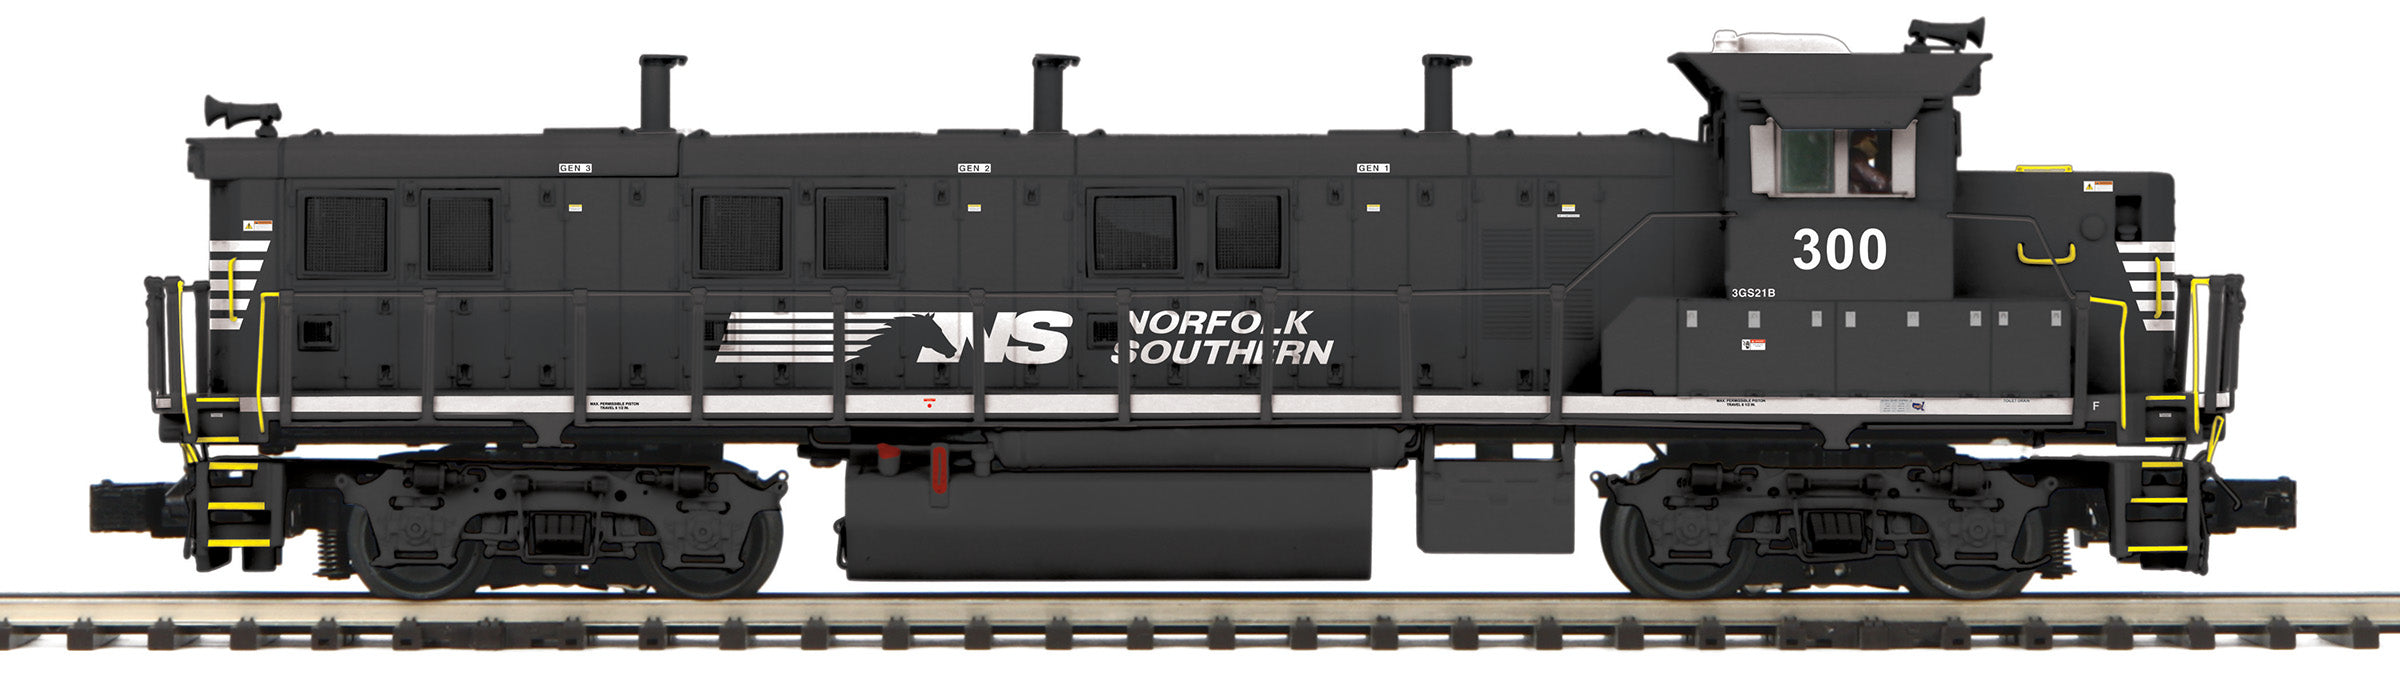 MTH 20-21662-1 - 3GS21B Genset Diesel Engine "Norfolk Southern" #300 w/ PS3 (Hi-Rail Wheels)